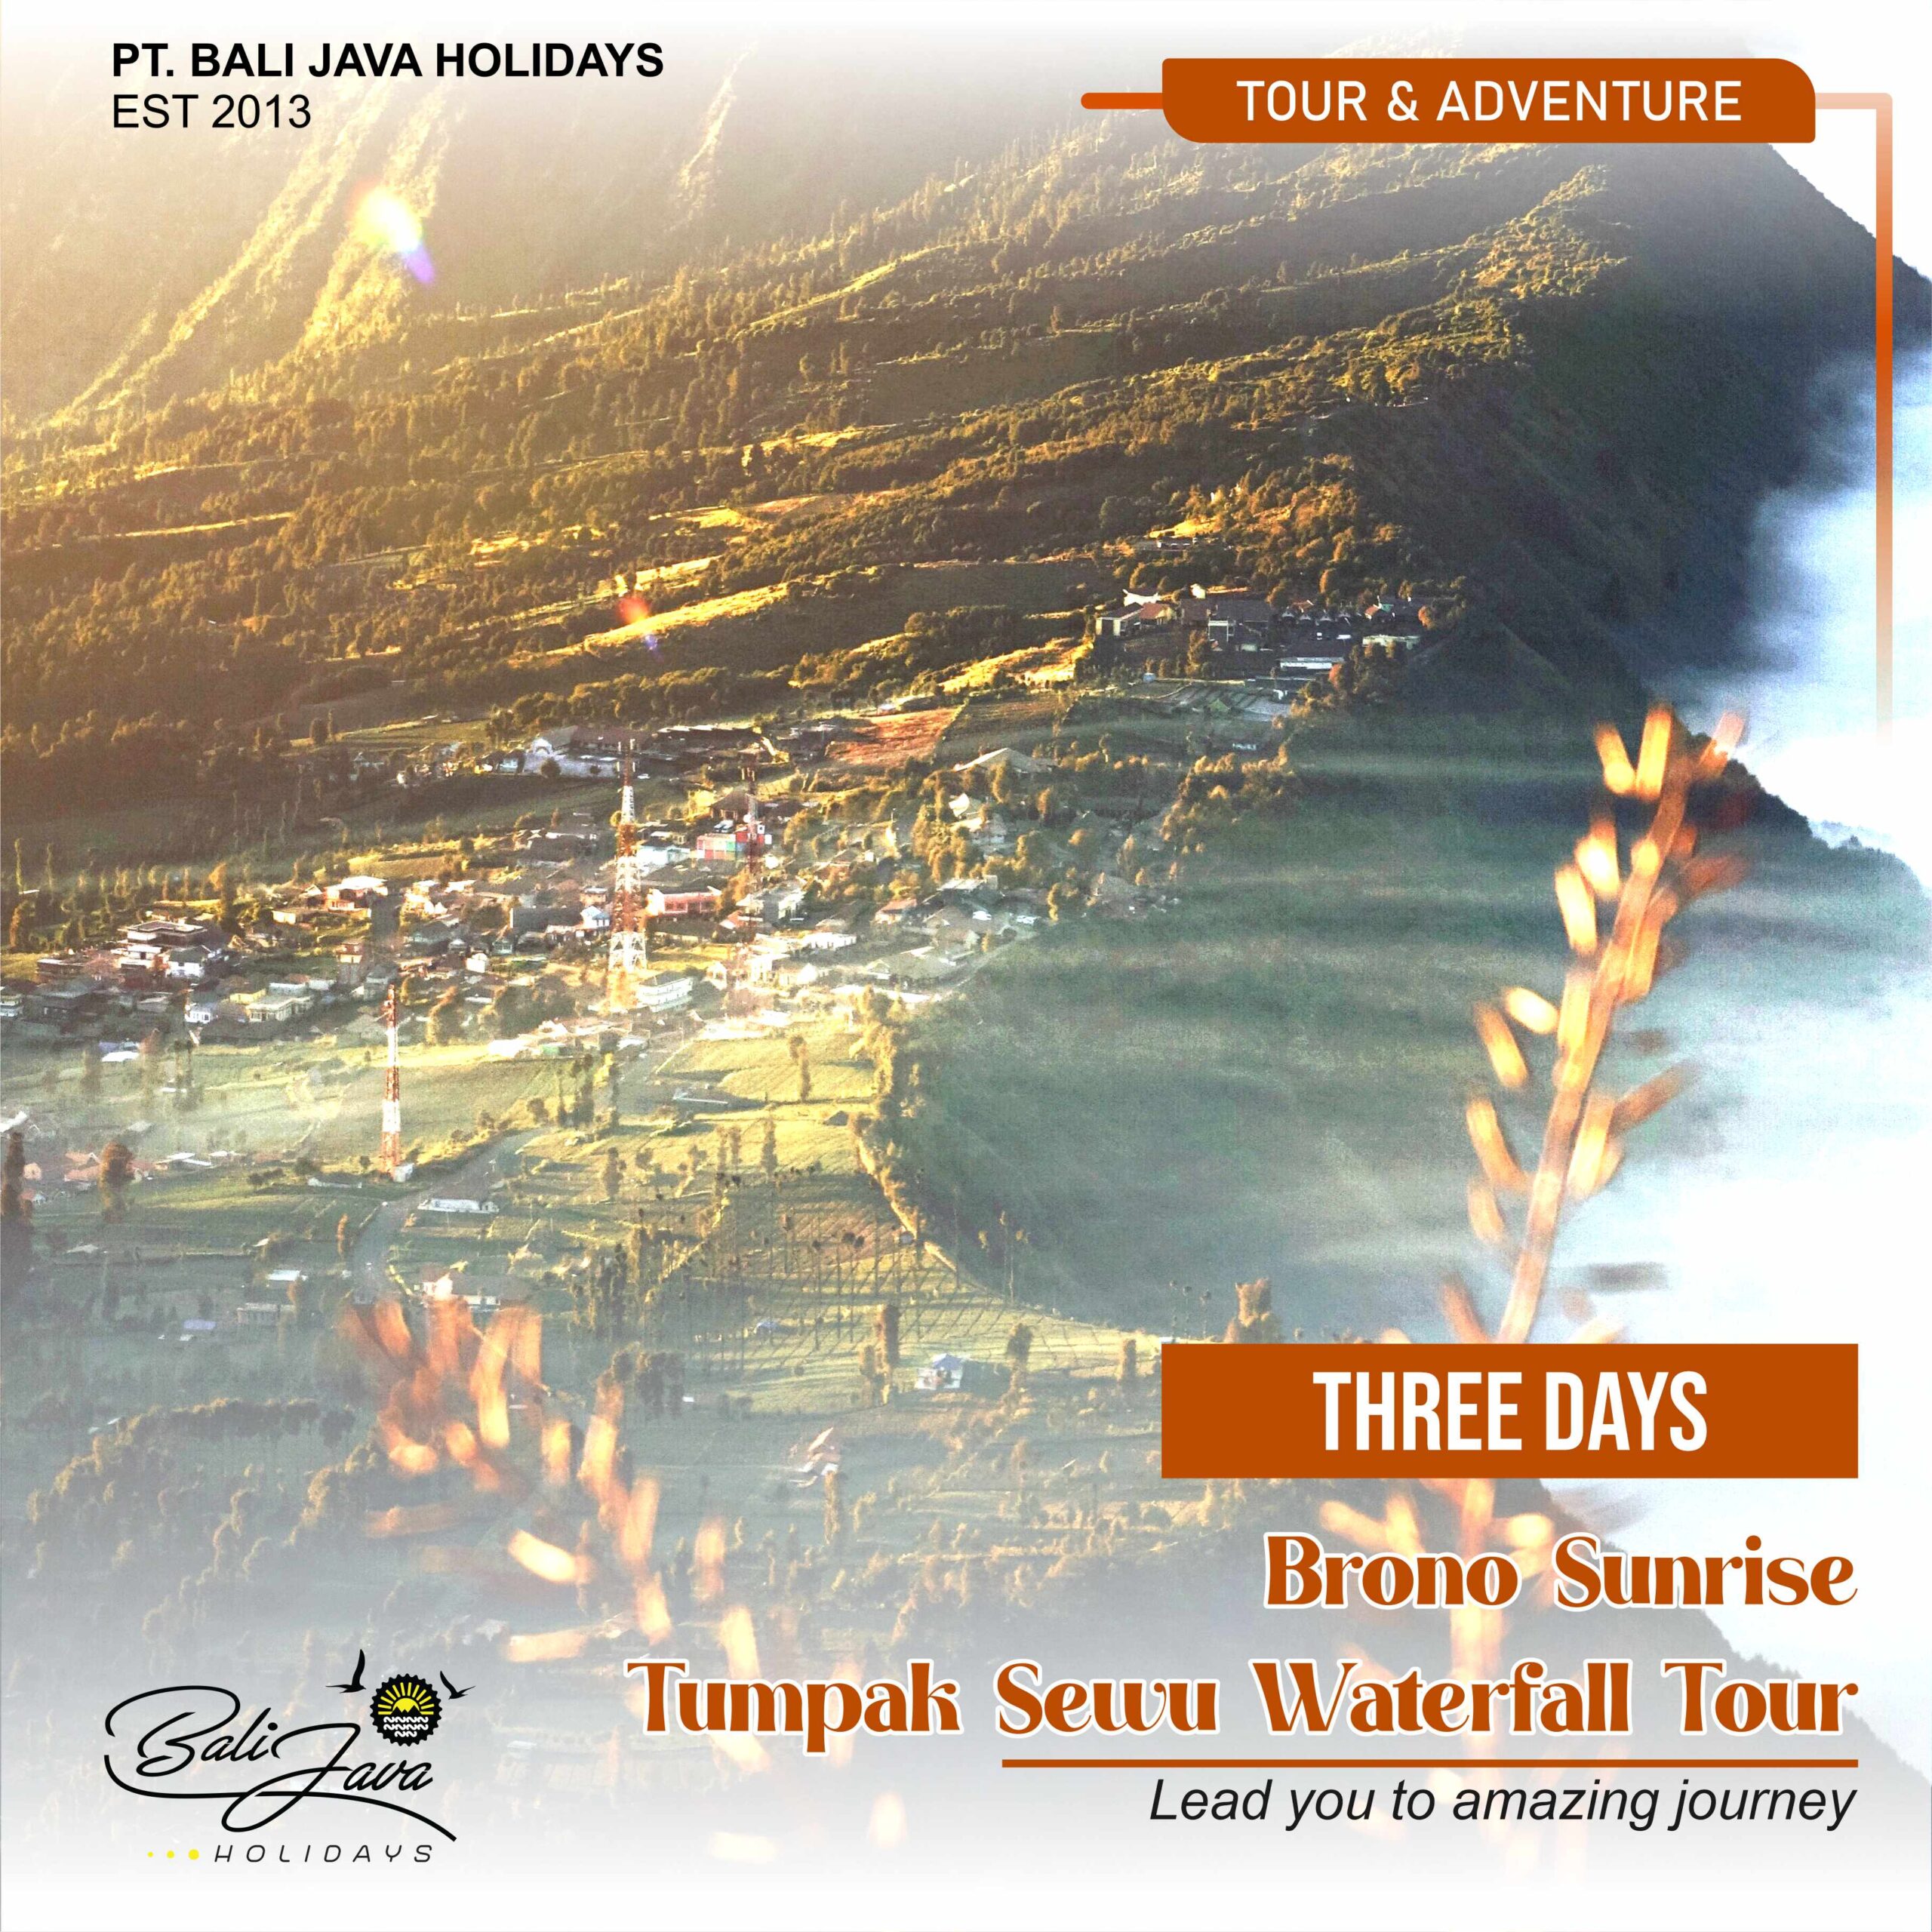 Mount Bromo Sunrise & Tumpak Sewu Waterfall Tour 3 Days